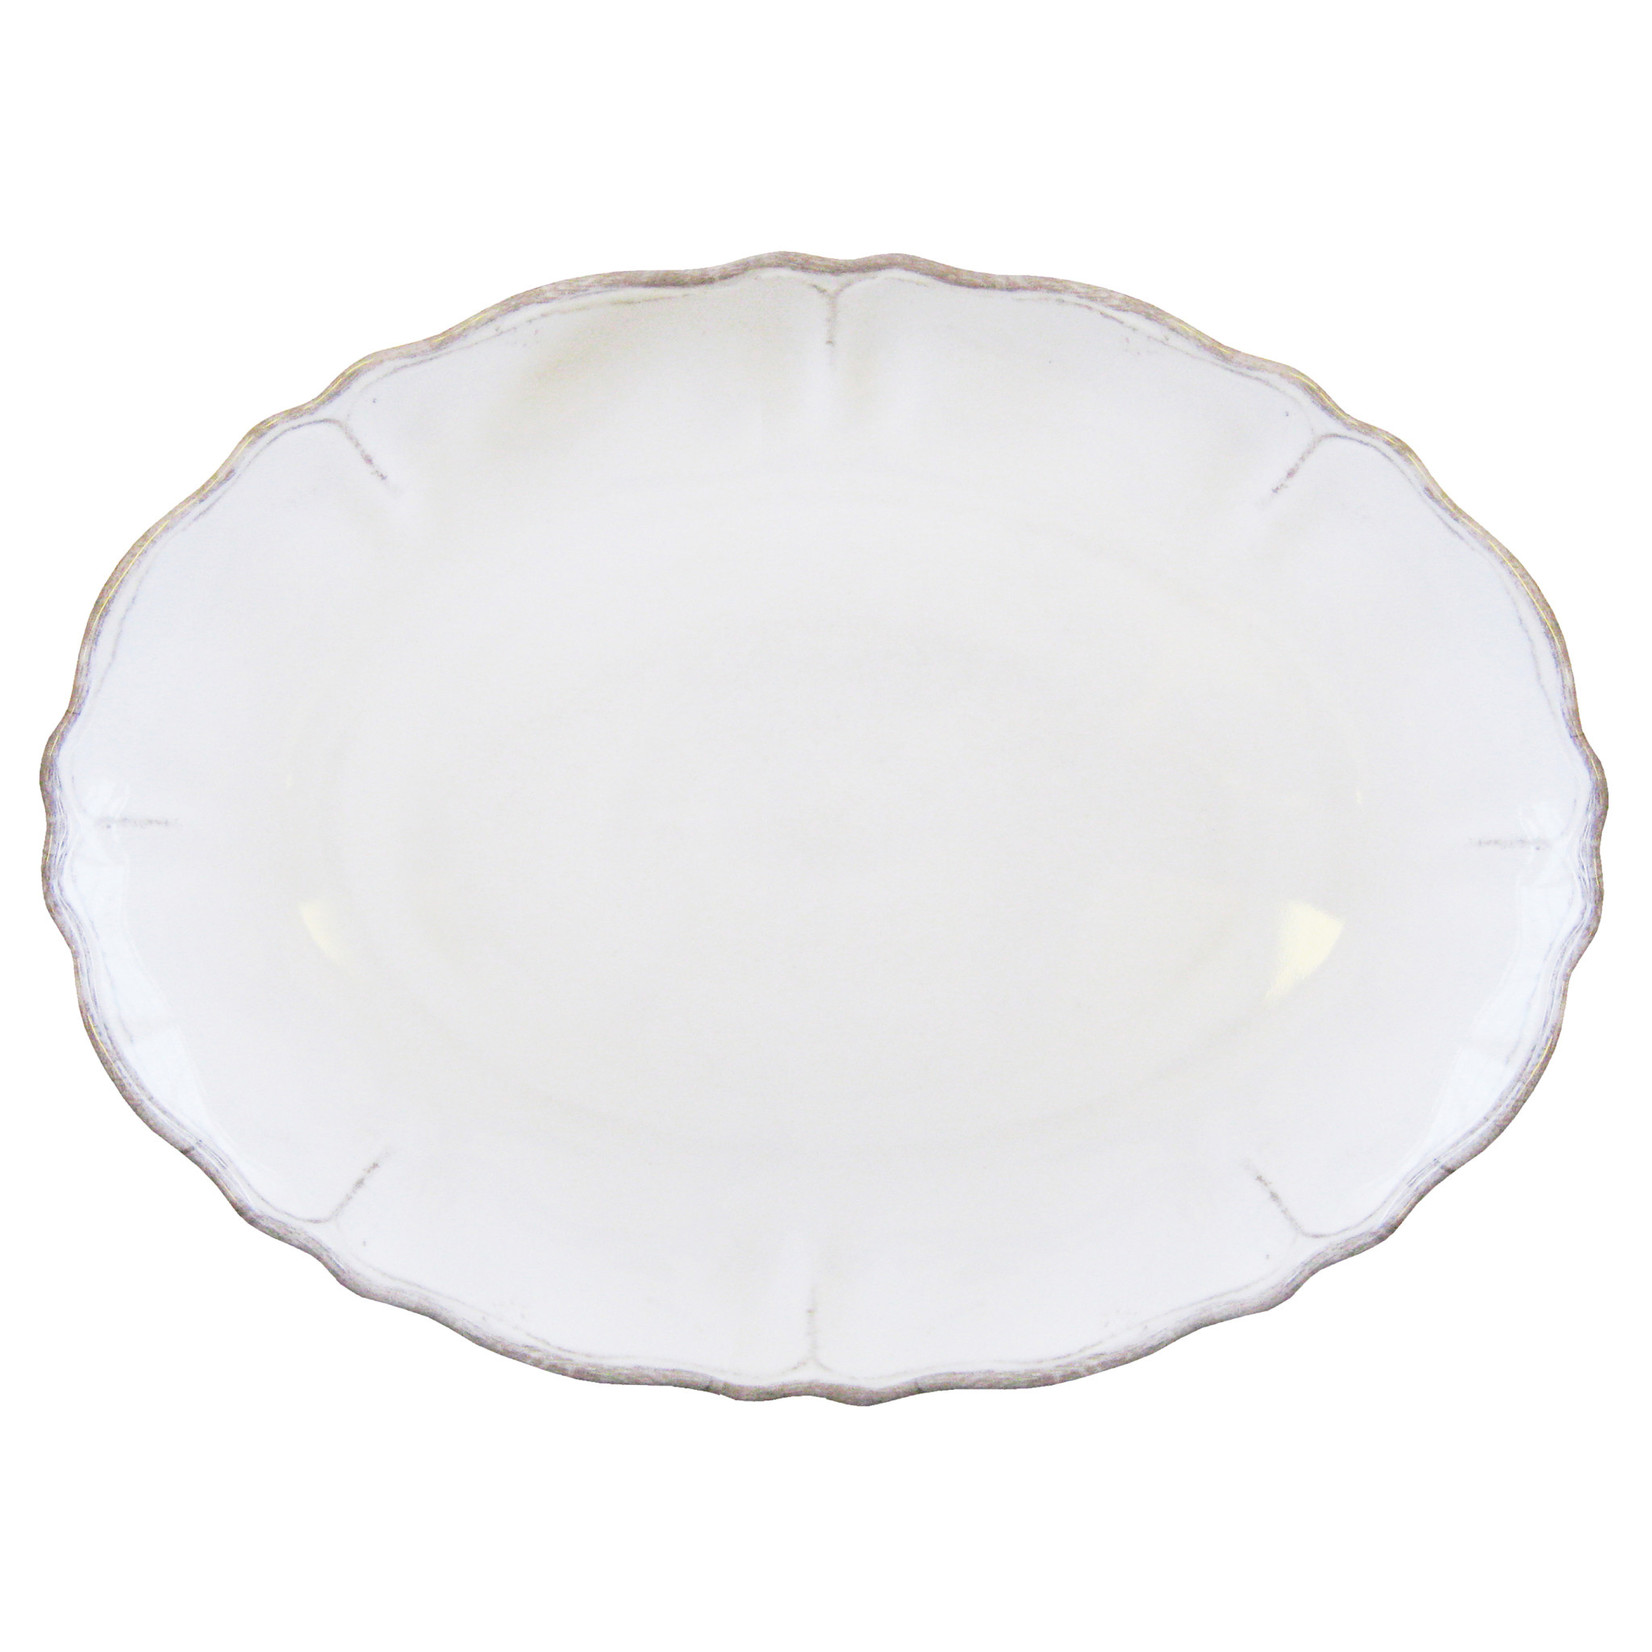 16"  Oval Platter- Rustica Antique White